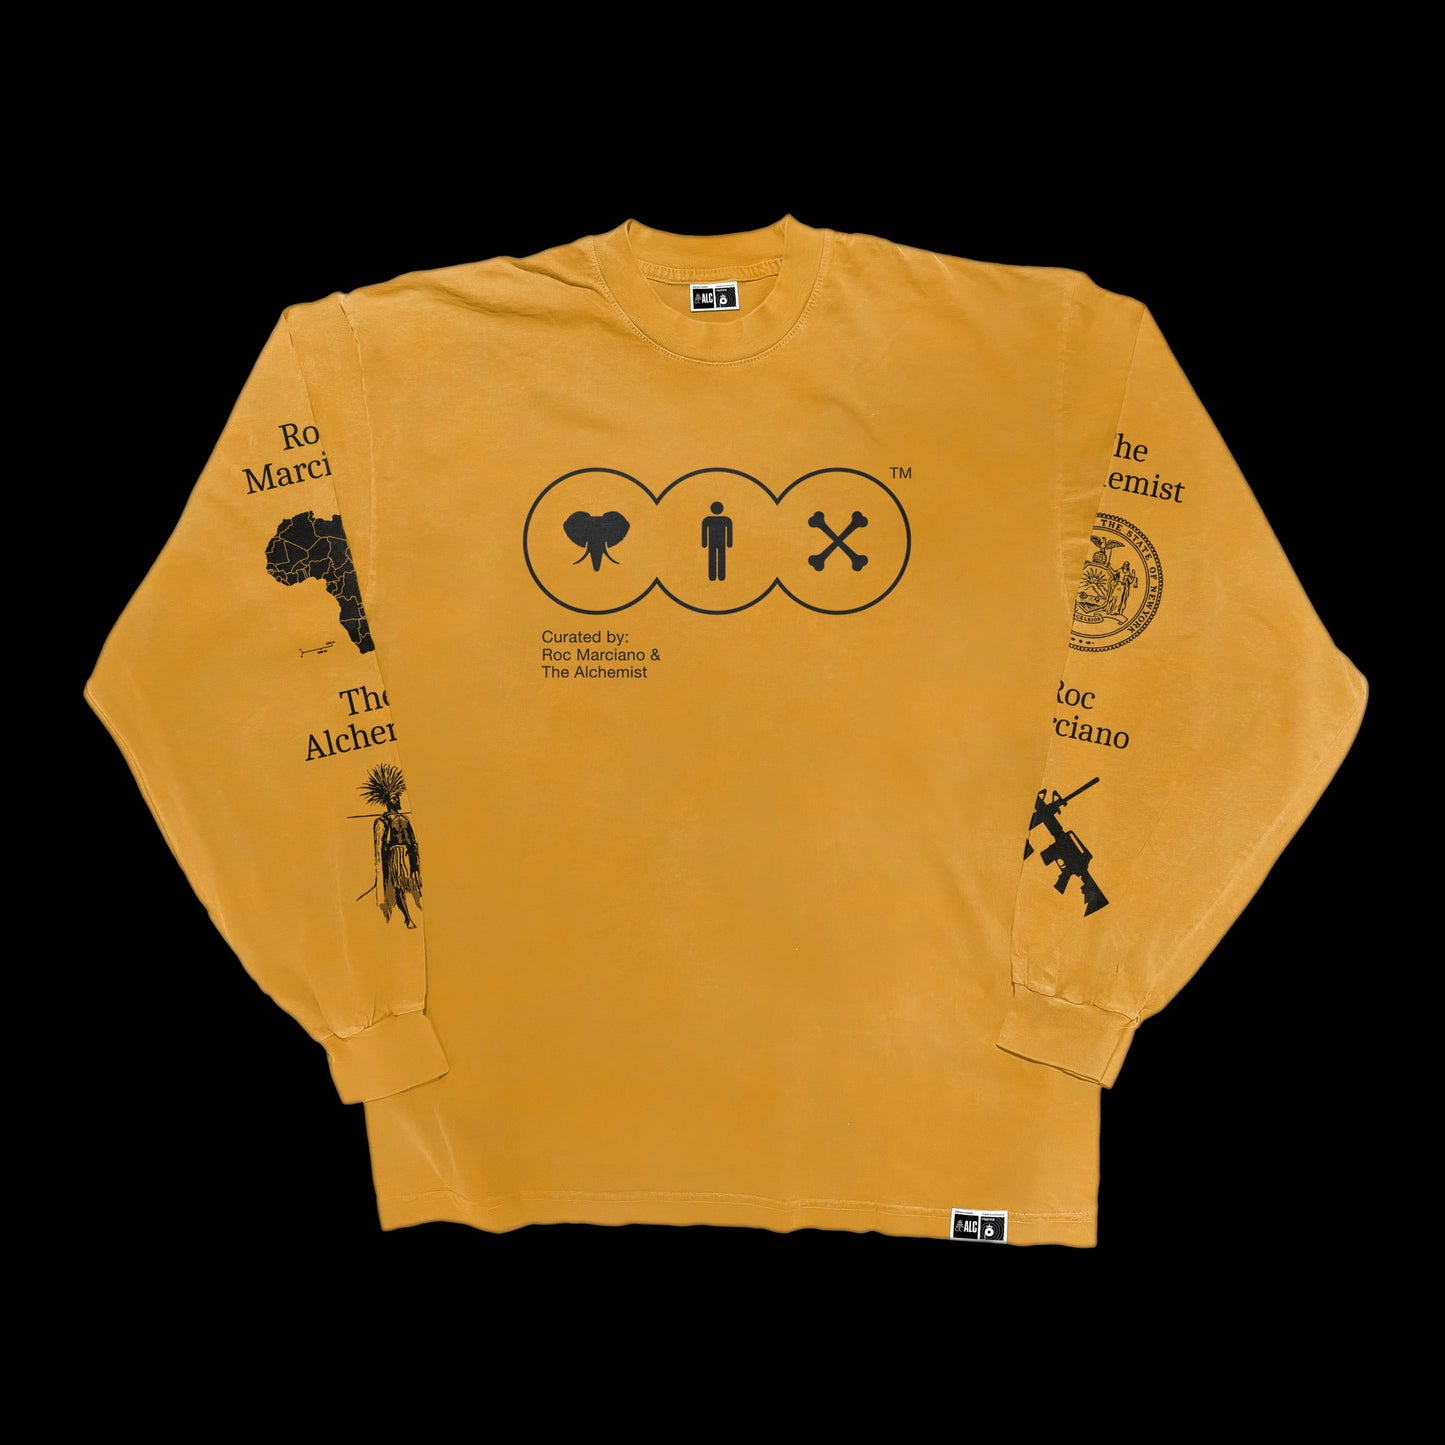 Presenting.. The Elephant Man's Bones (Yellow Longsleeve Shirt)